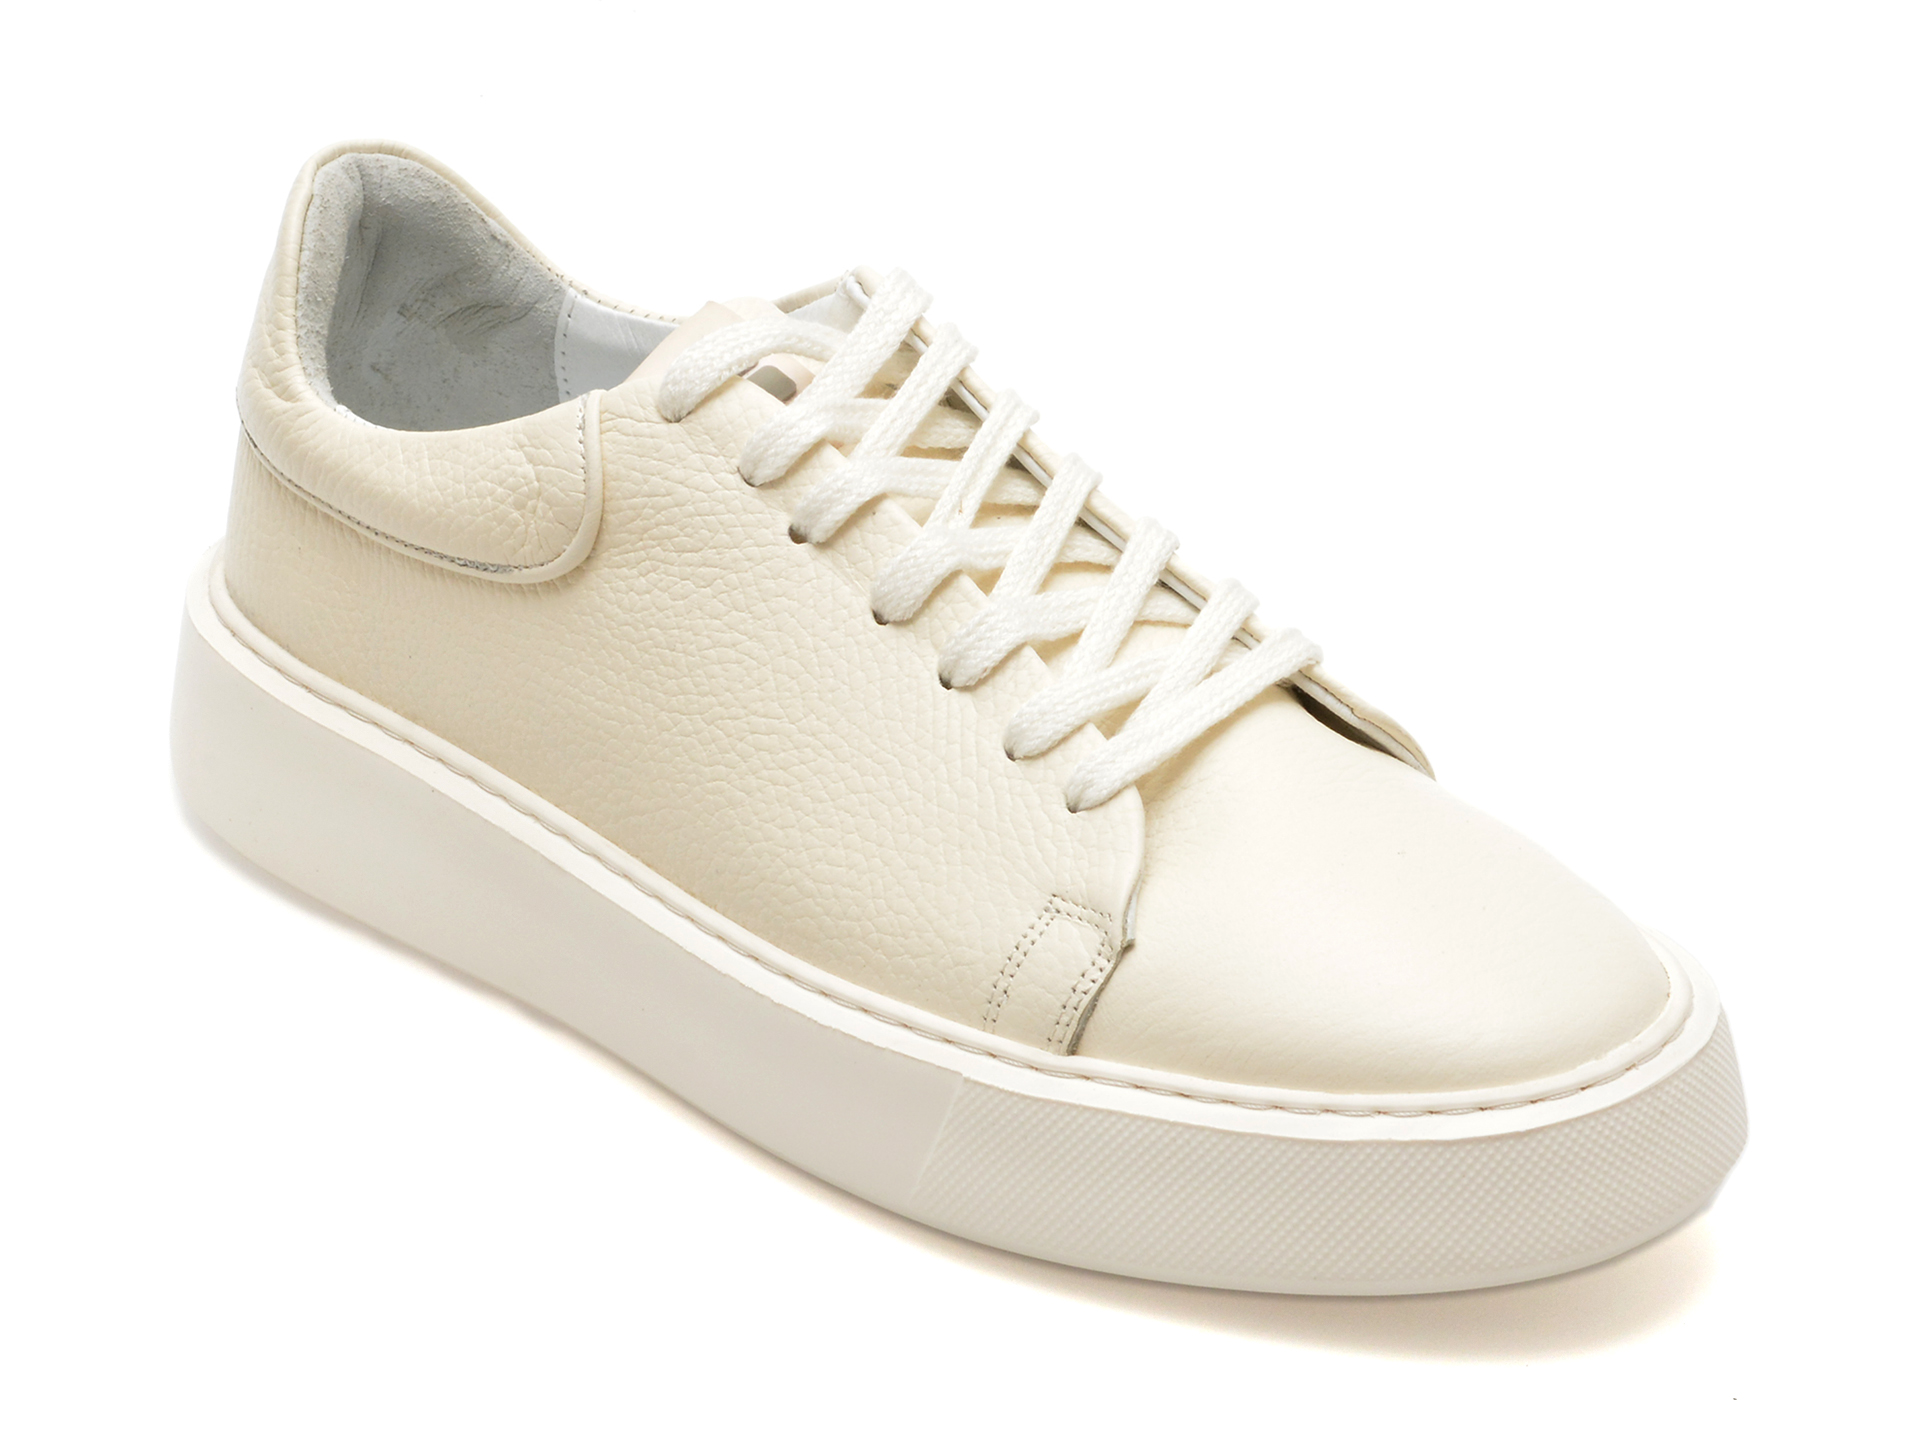 Pantofi casual OTTER albi, LSAV, din piele naturala